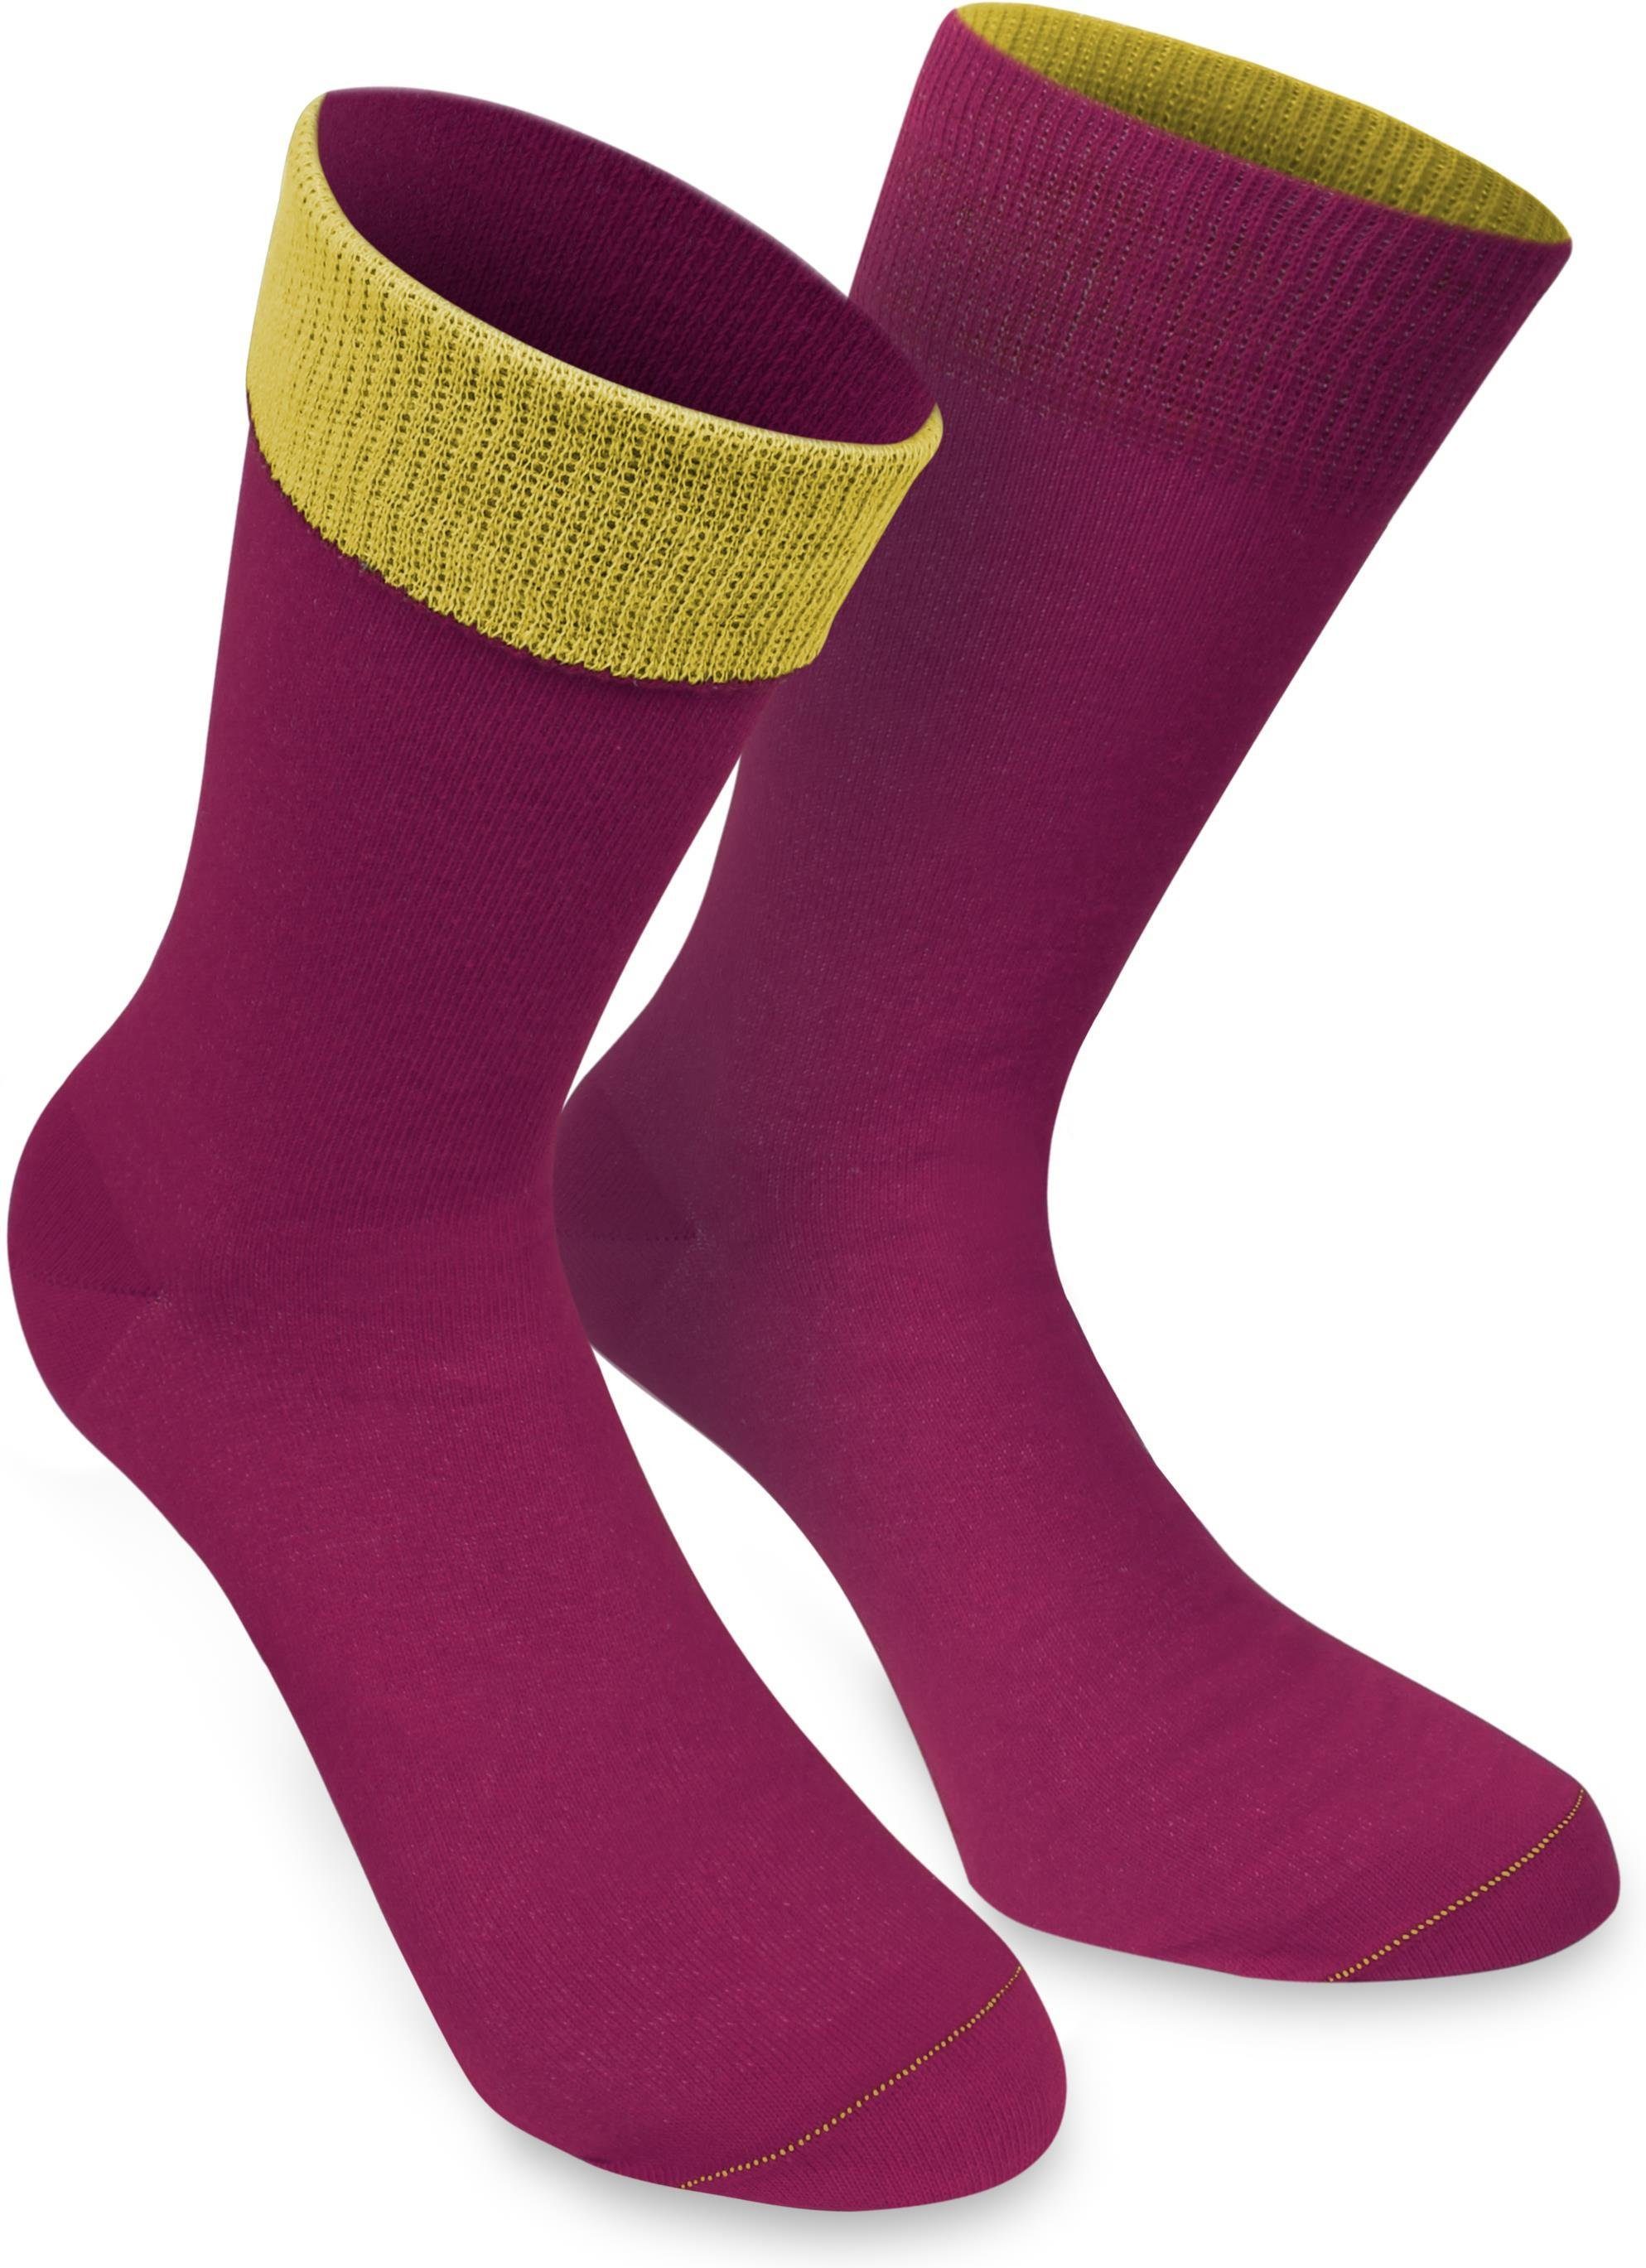 Paar abgesetzter Basicsocken farbig Bi-Color 1 Bund Paar) Magenta/Gelb normani Socken (1